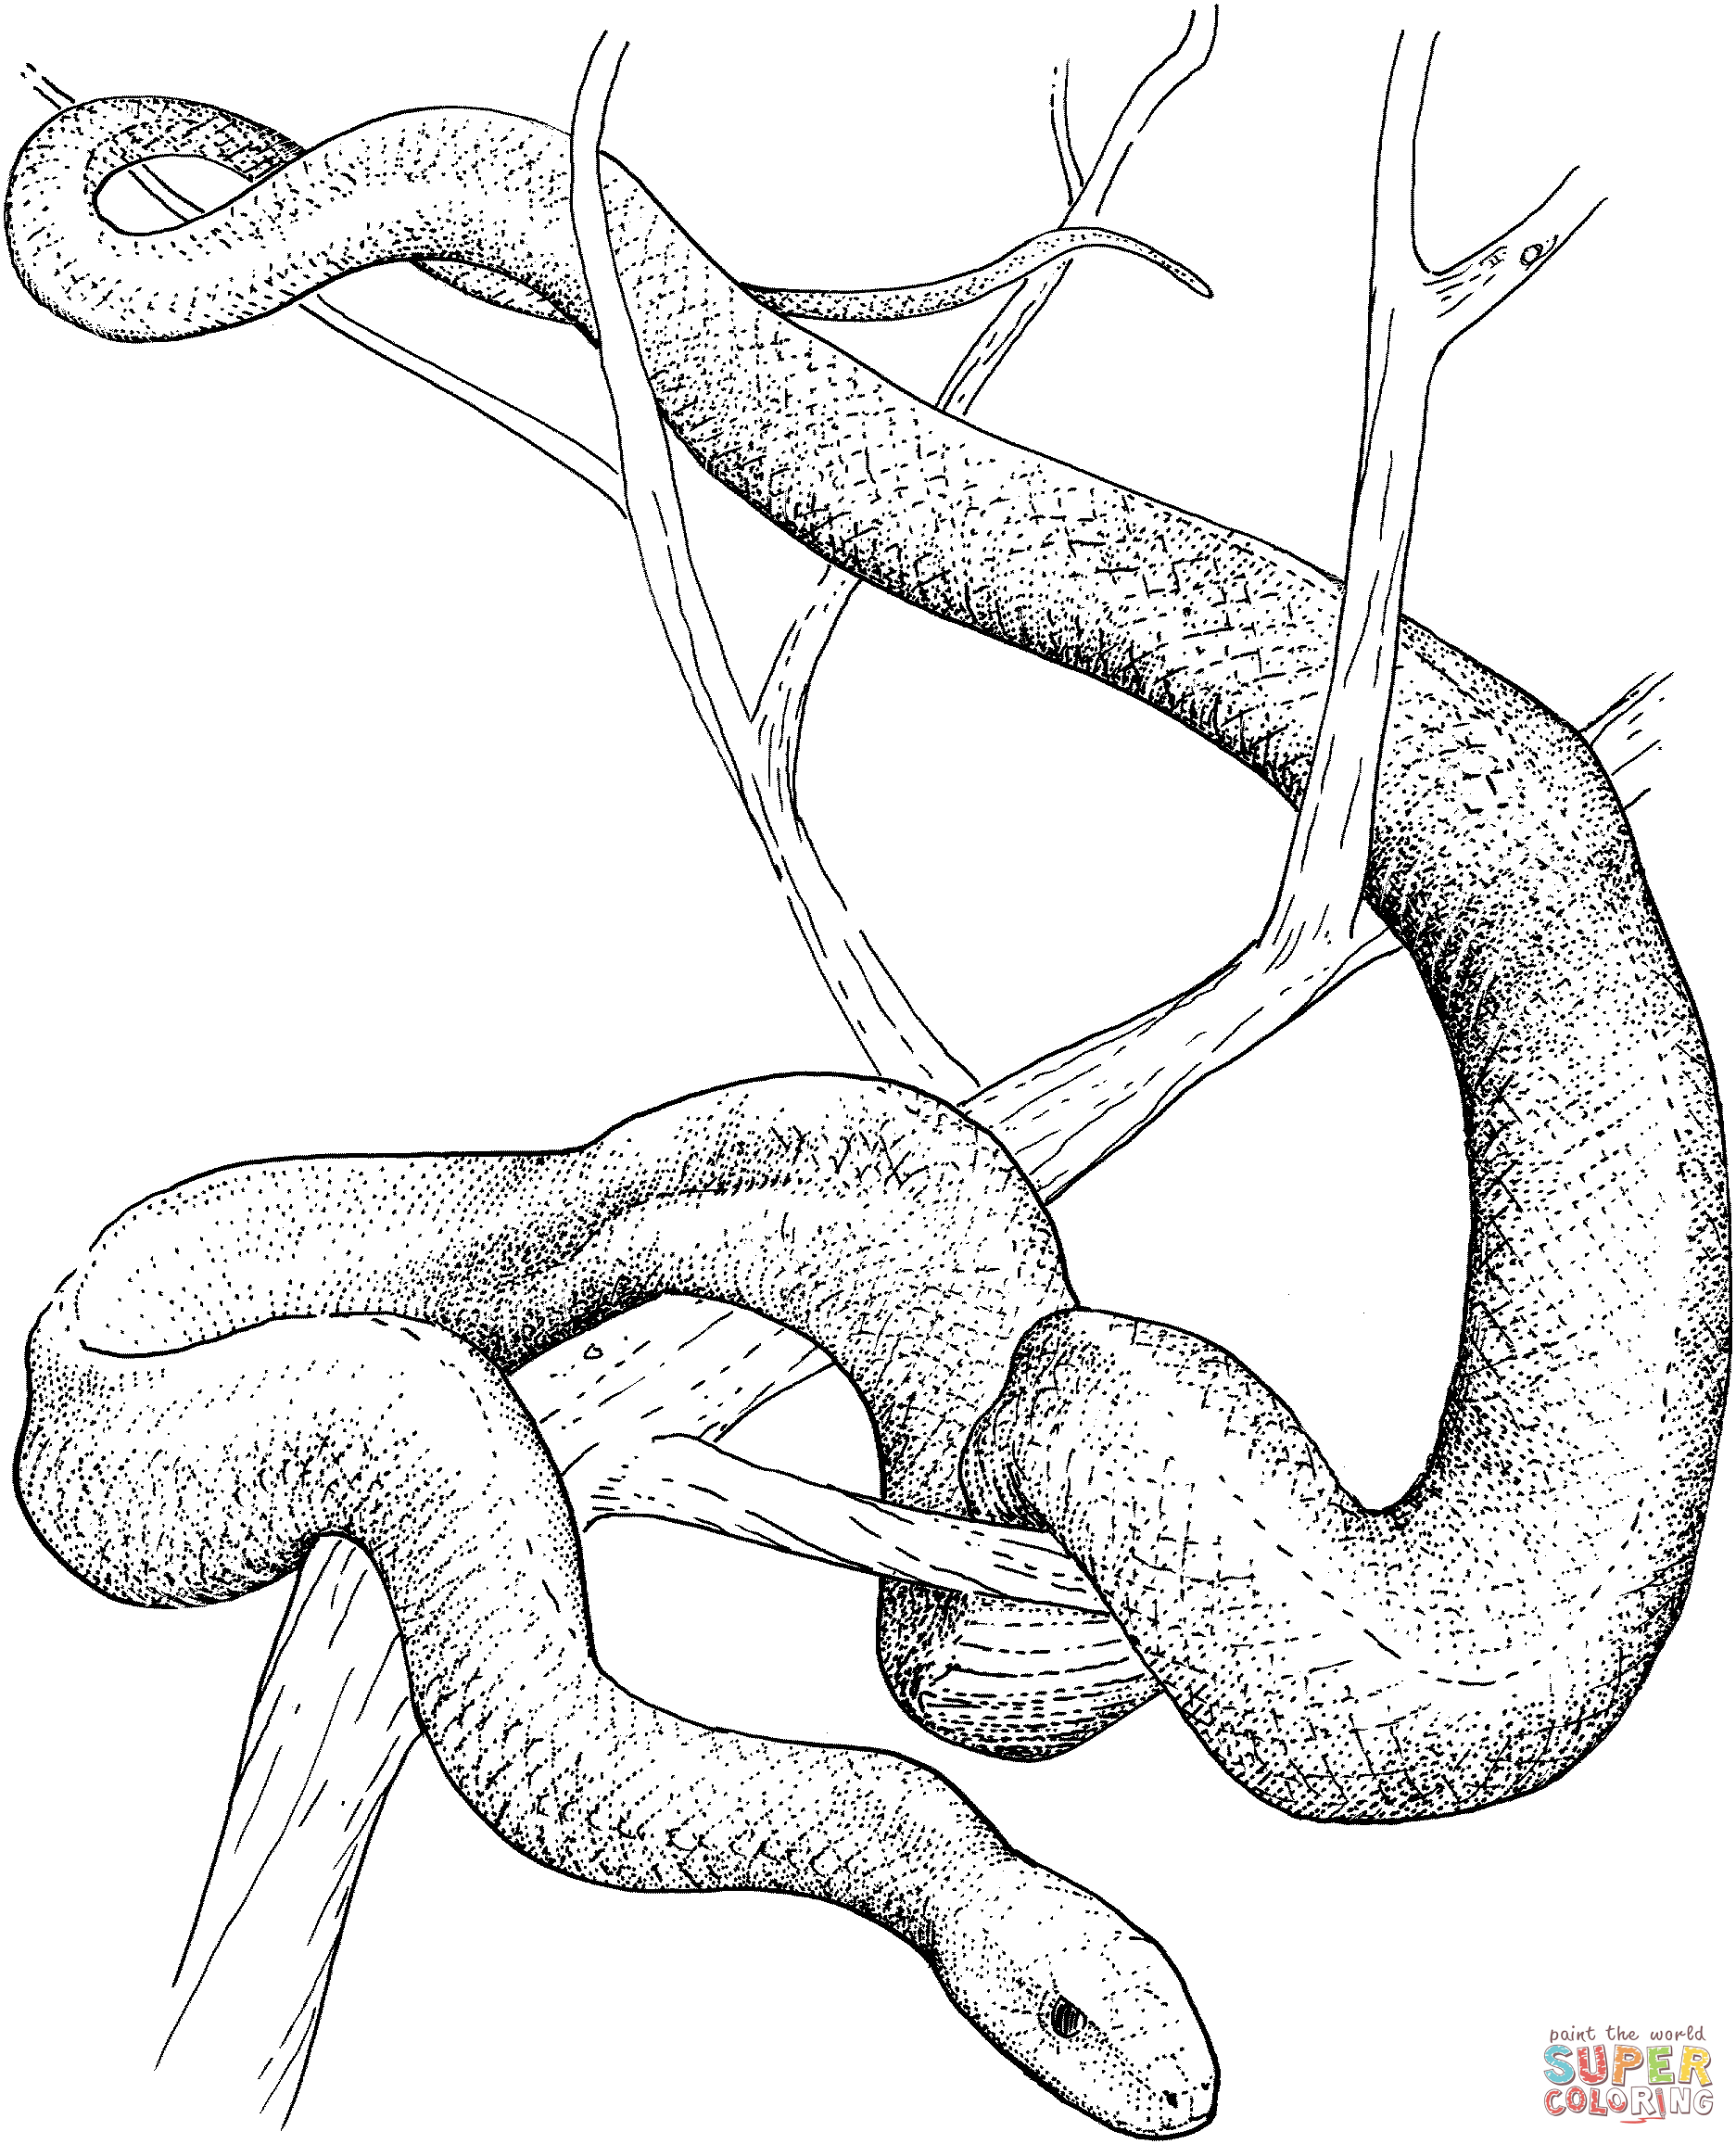 Tree Snake coloring #15, Download drawings